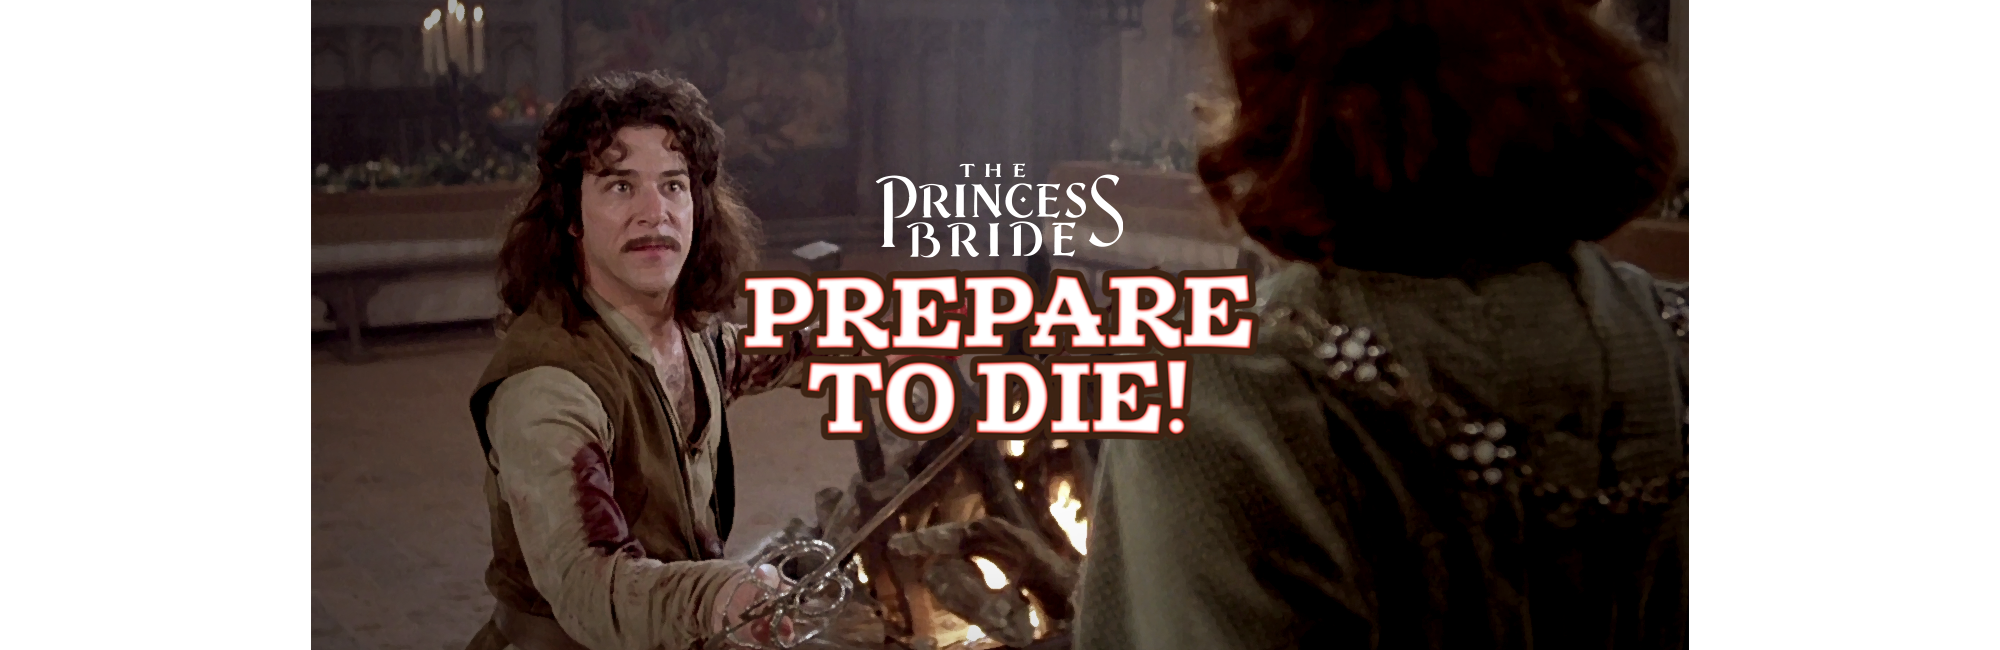 The Princess Bride Prepare to Die! party game